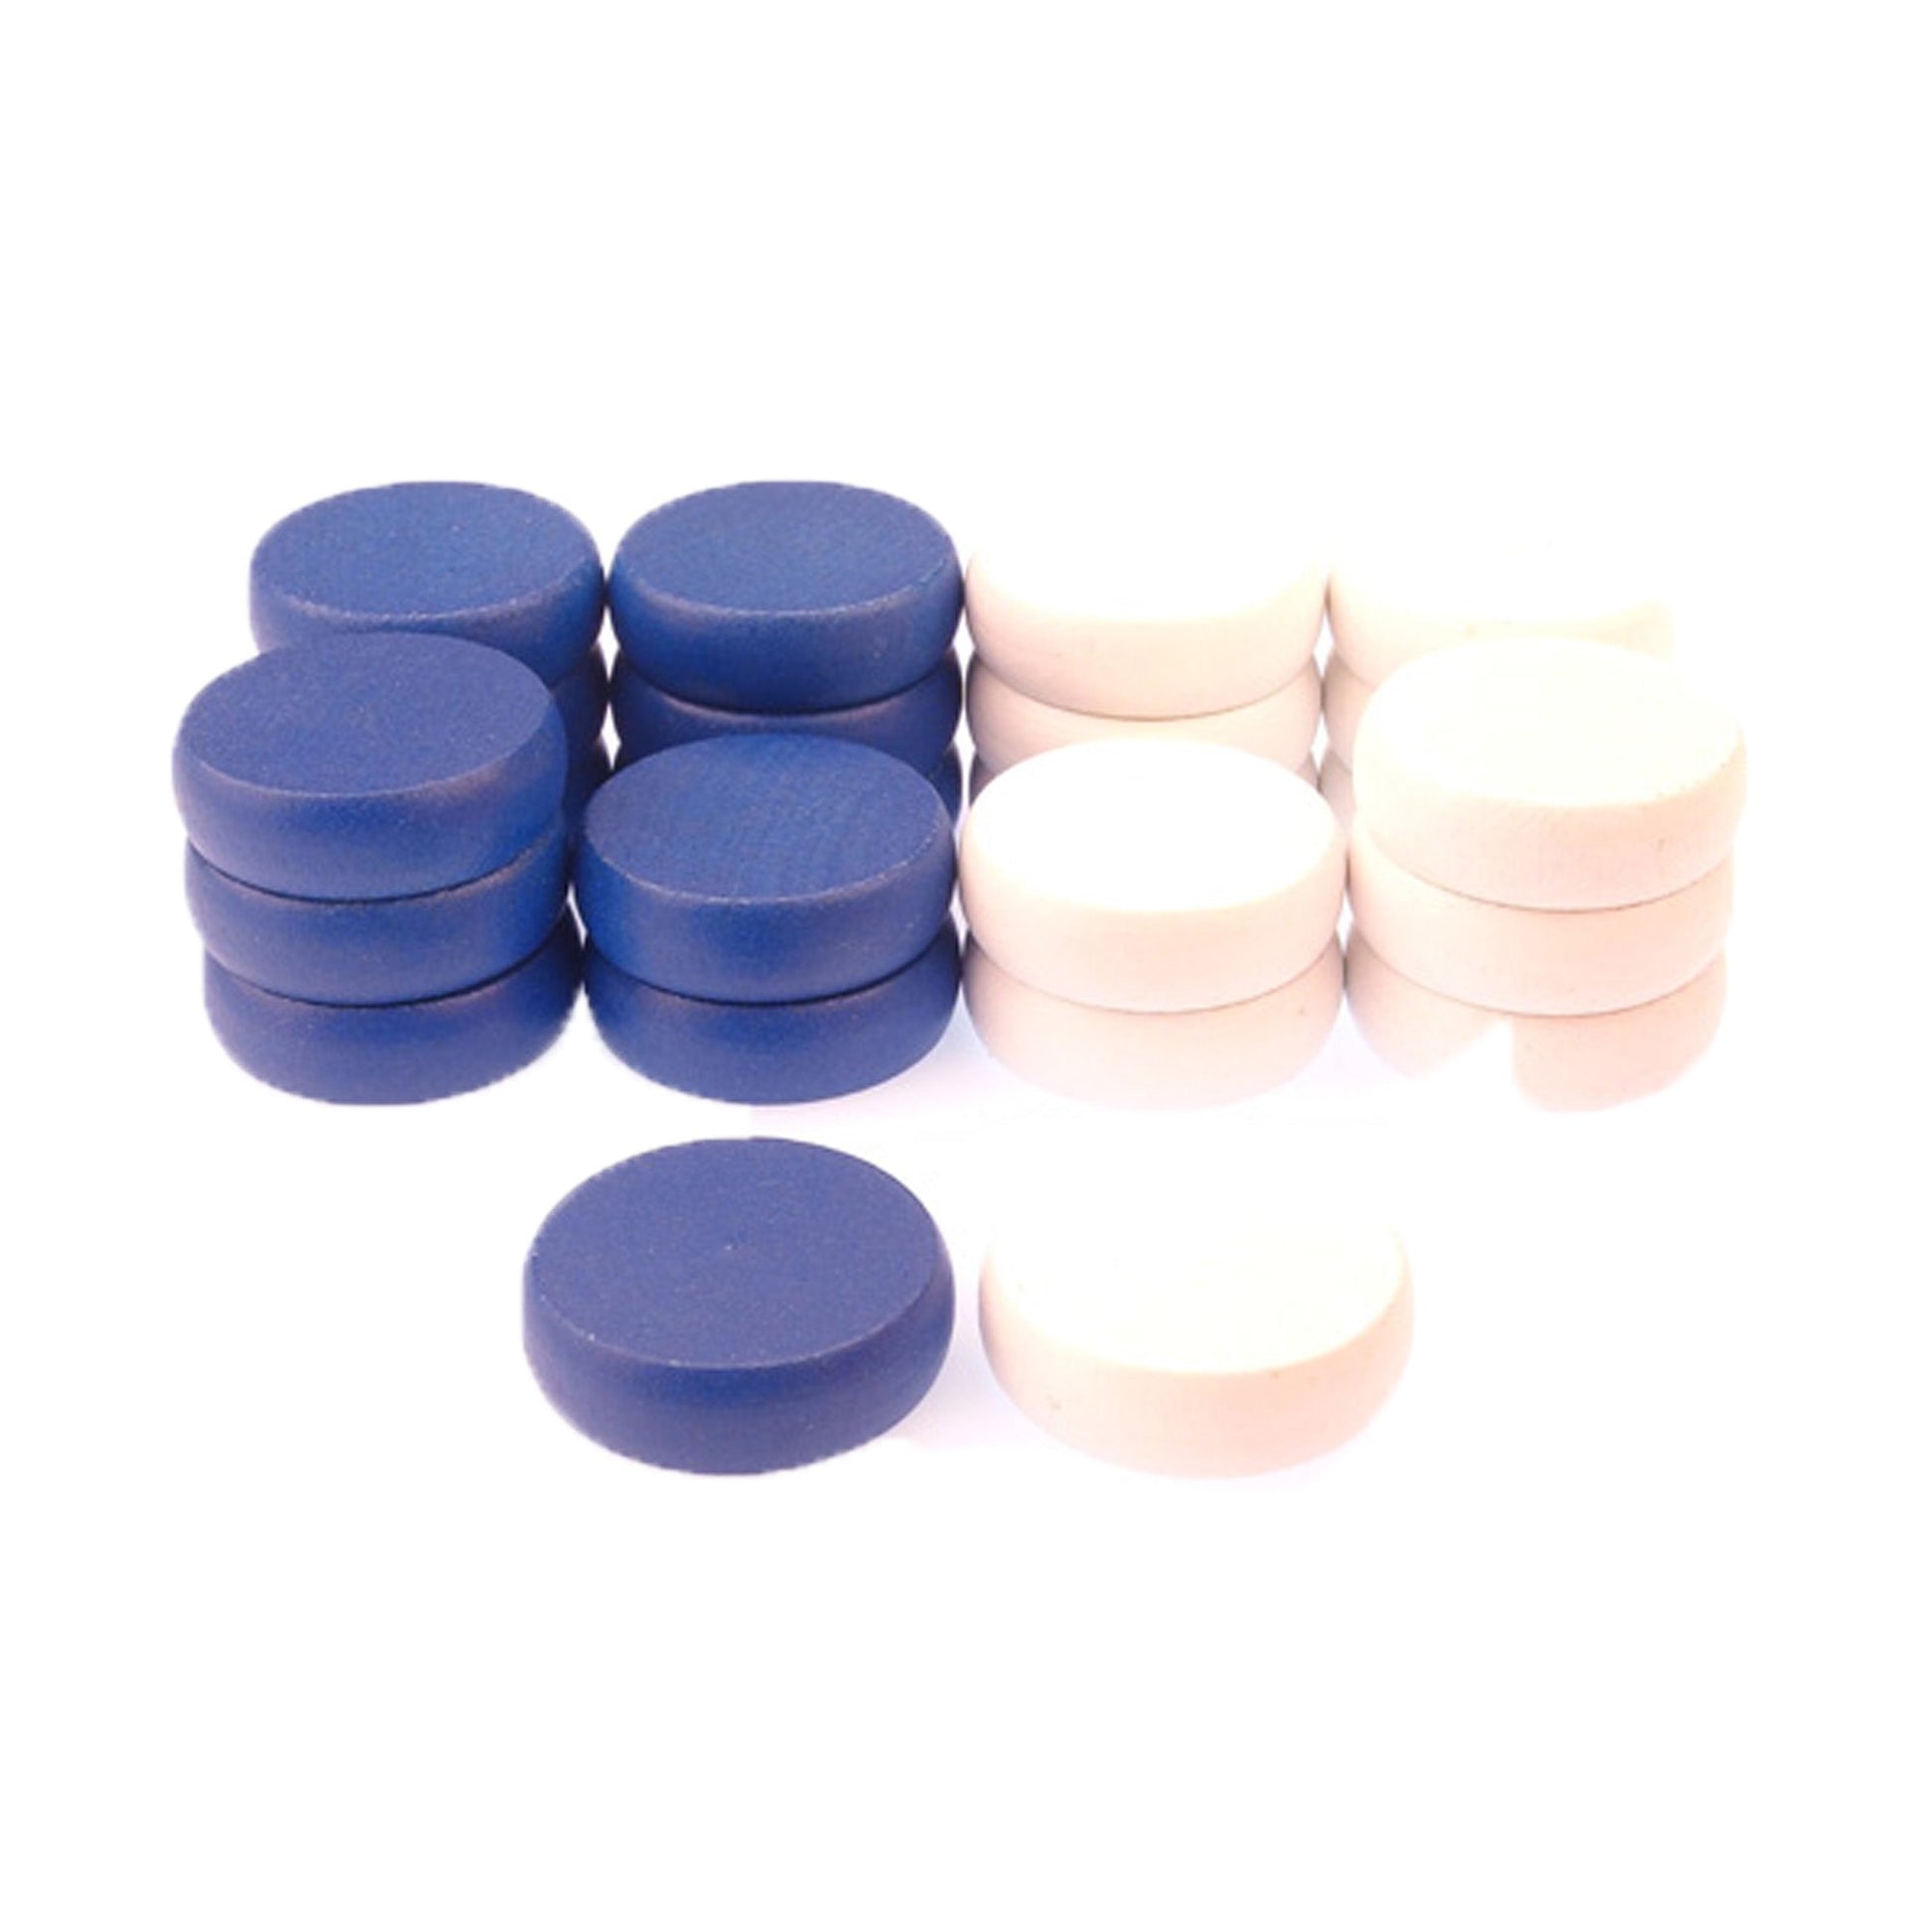 26 Blue & White Crokinole Tournament Discs + Bag (13 Blue & 13 White) - Crokinole Europe